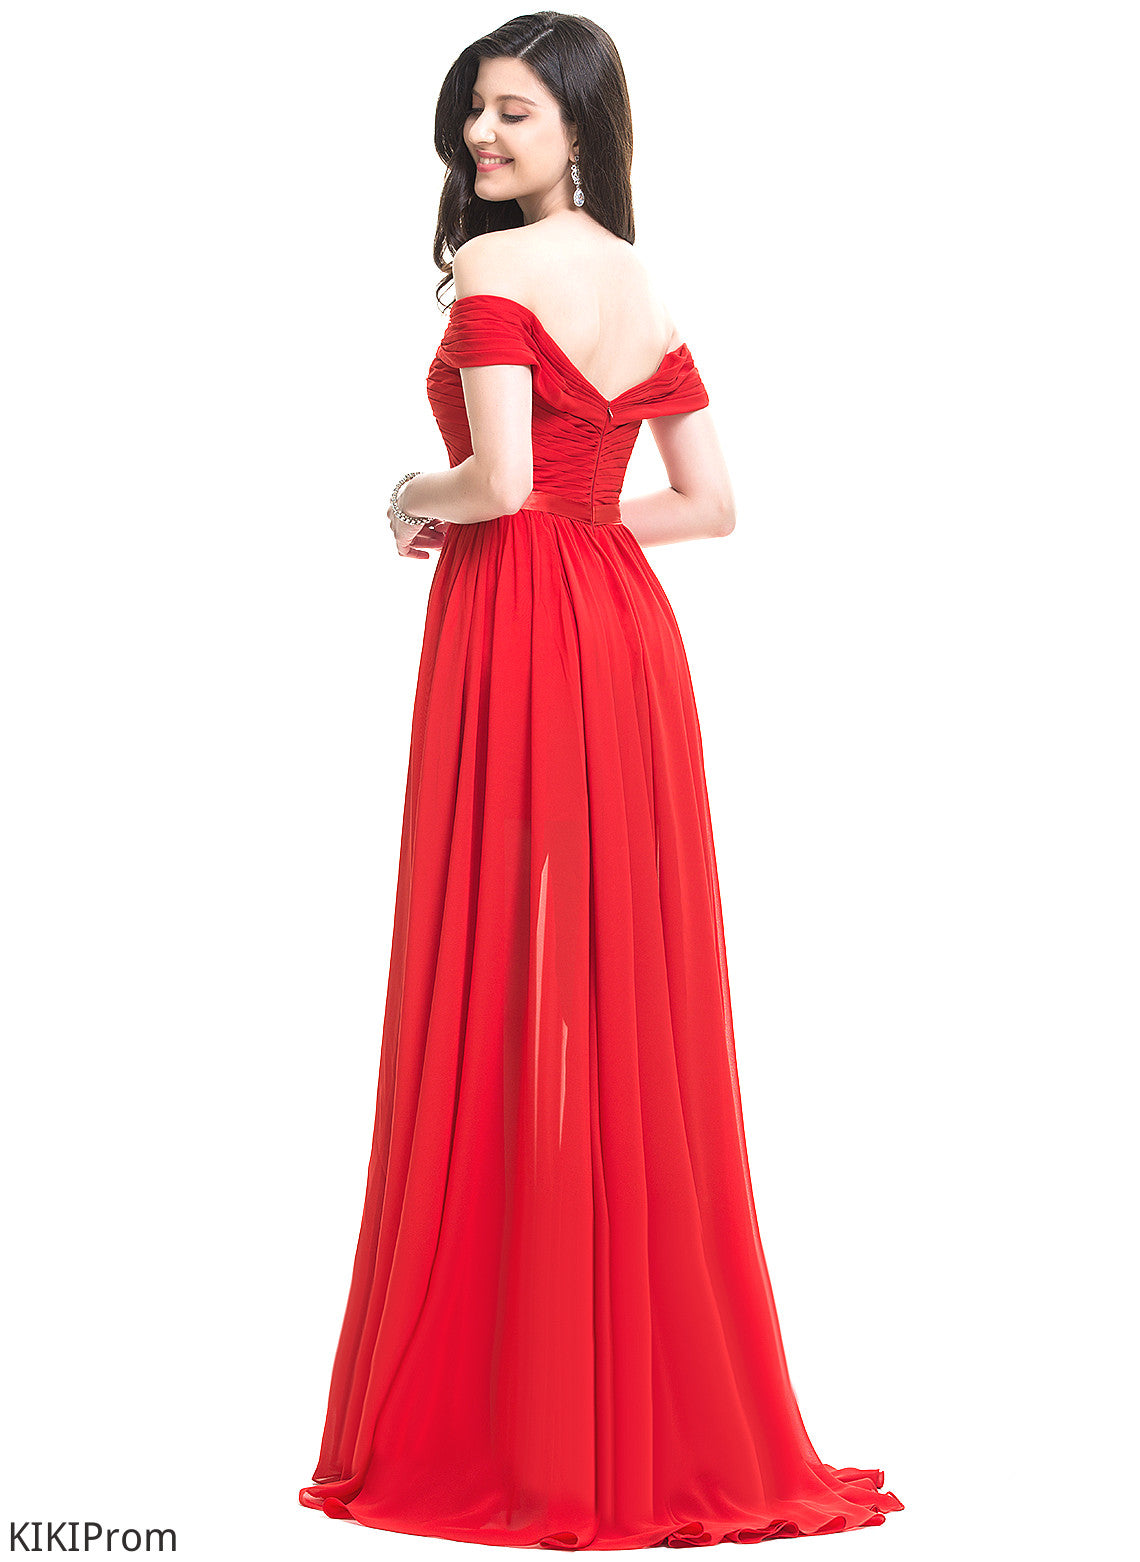 Silhouette Length Embellishment SweepTrain Pleated Off-the-Shoulder Fabric A-Line Neckline Cheyanne Natural Waist A-Line/Princess Bridesmaid Dresses